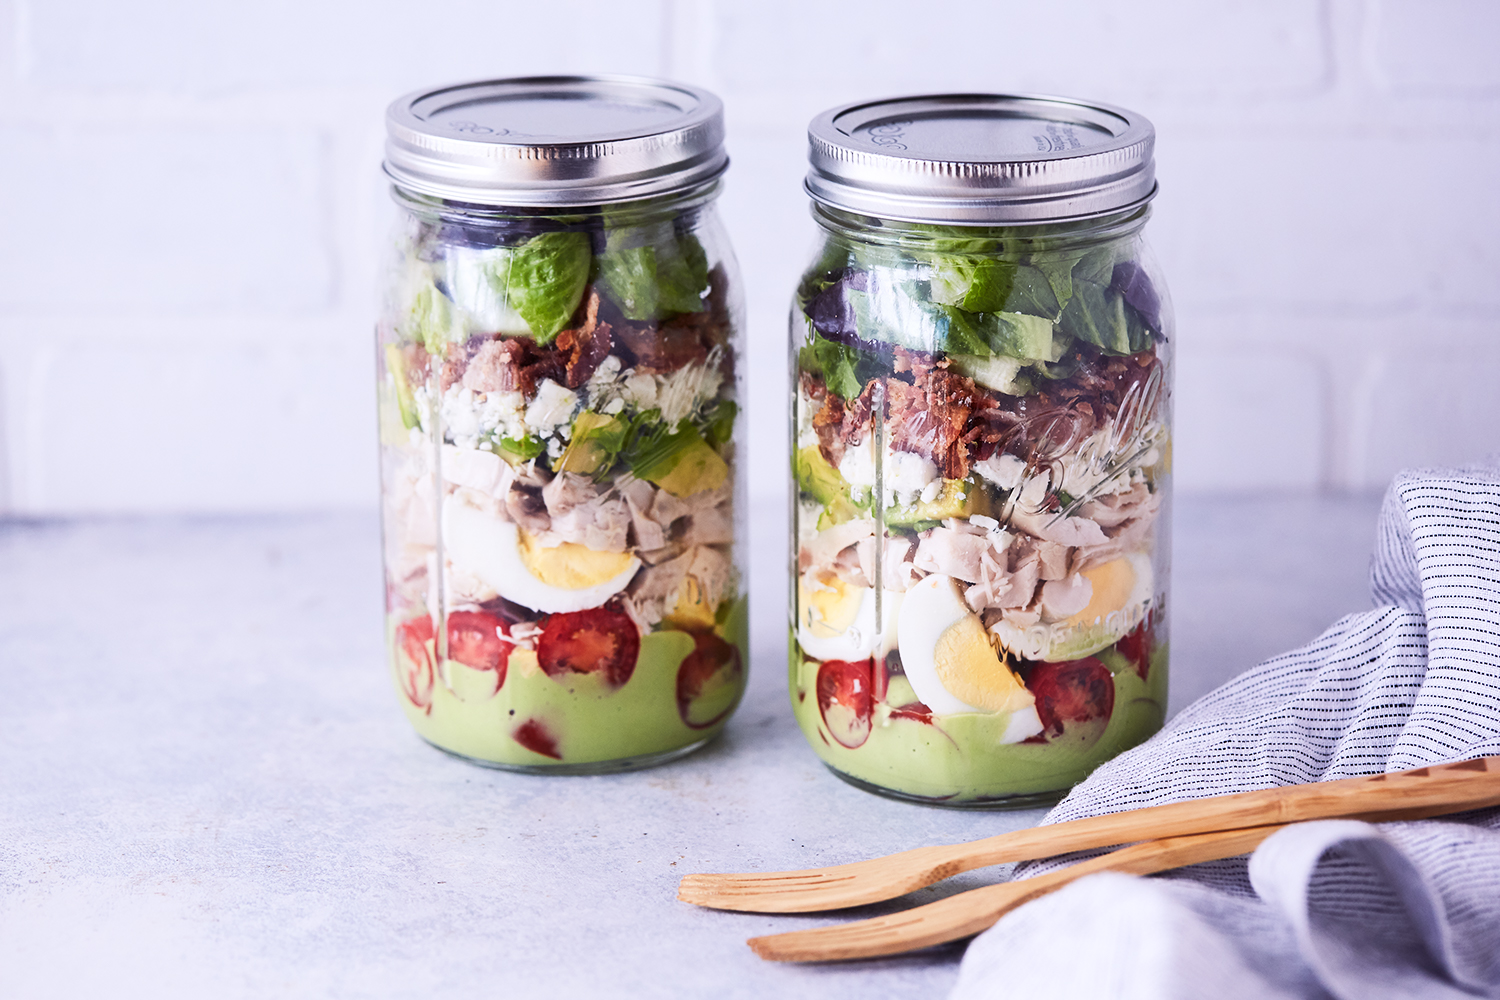 Best Cobb Salad Recipe - Easy Layered Cobb Salad in a Jar 